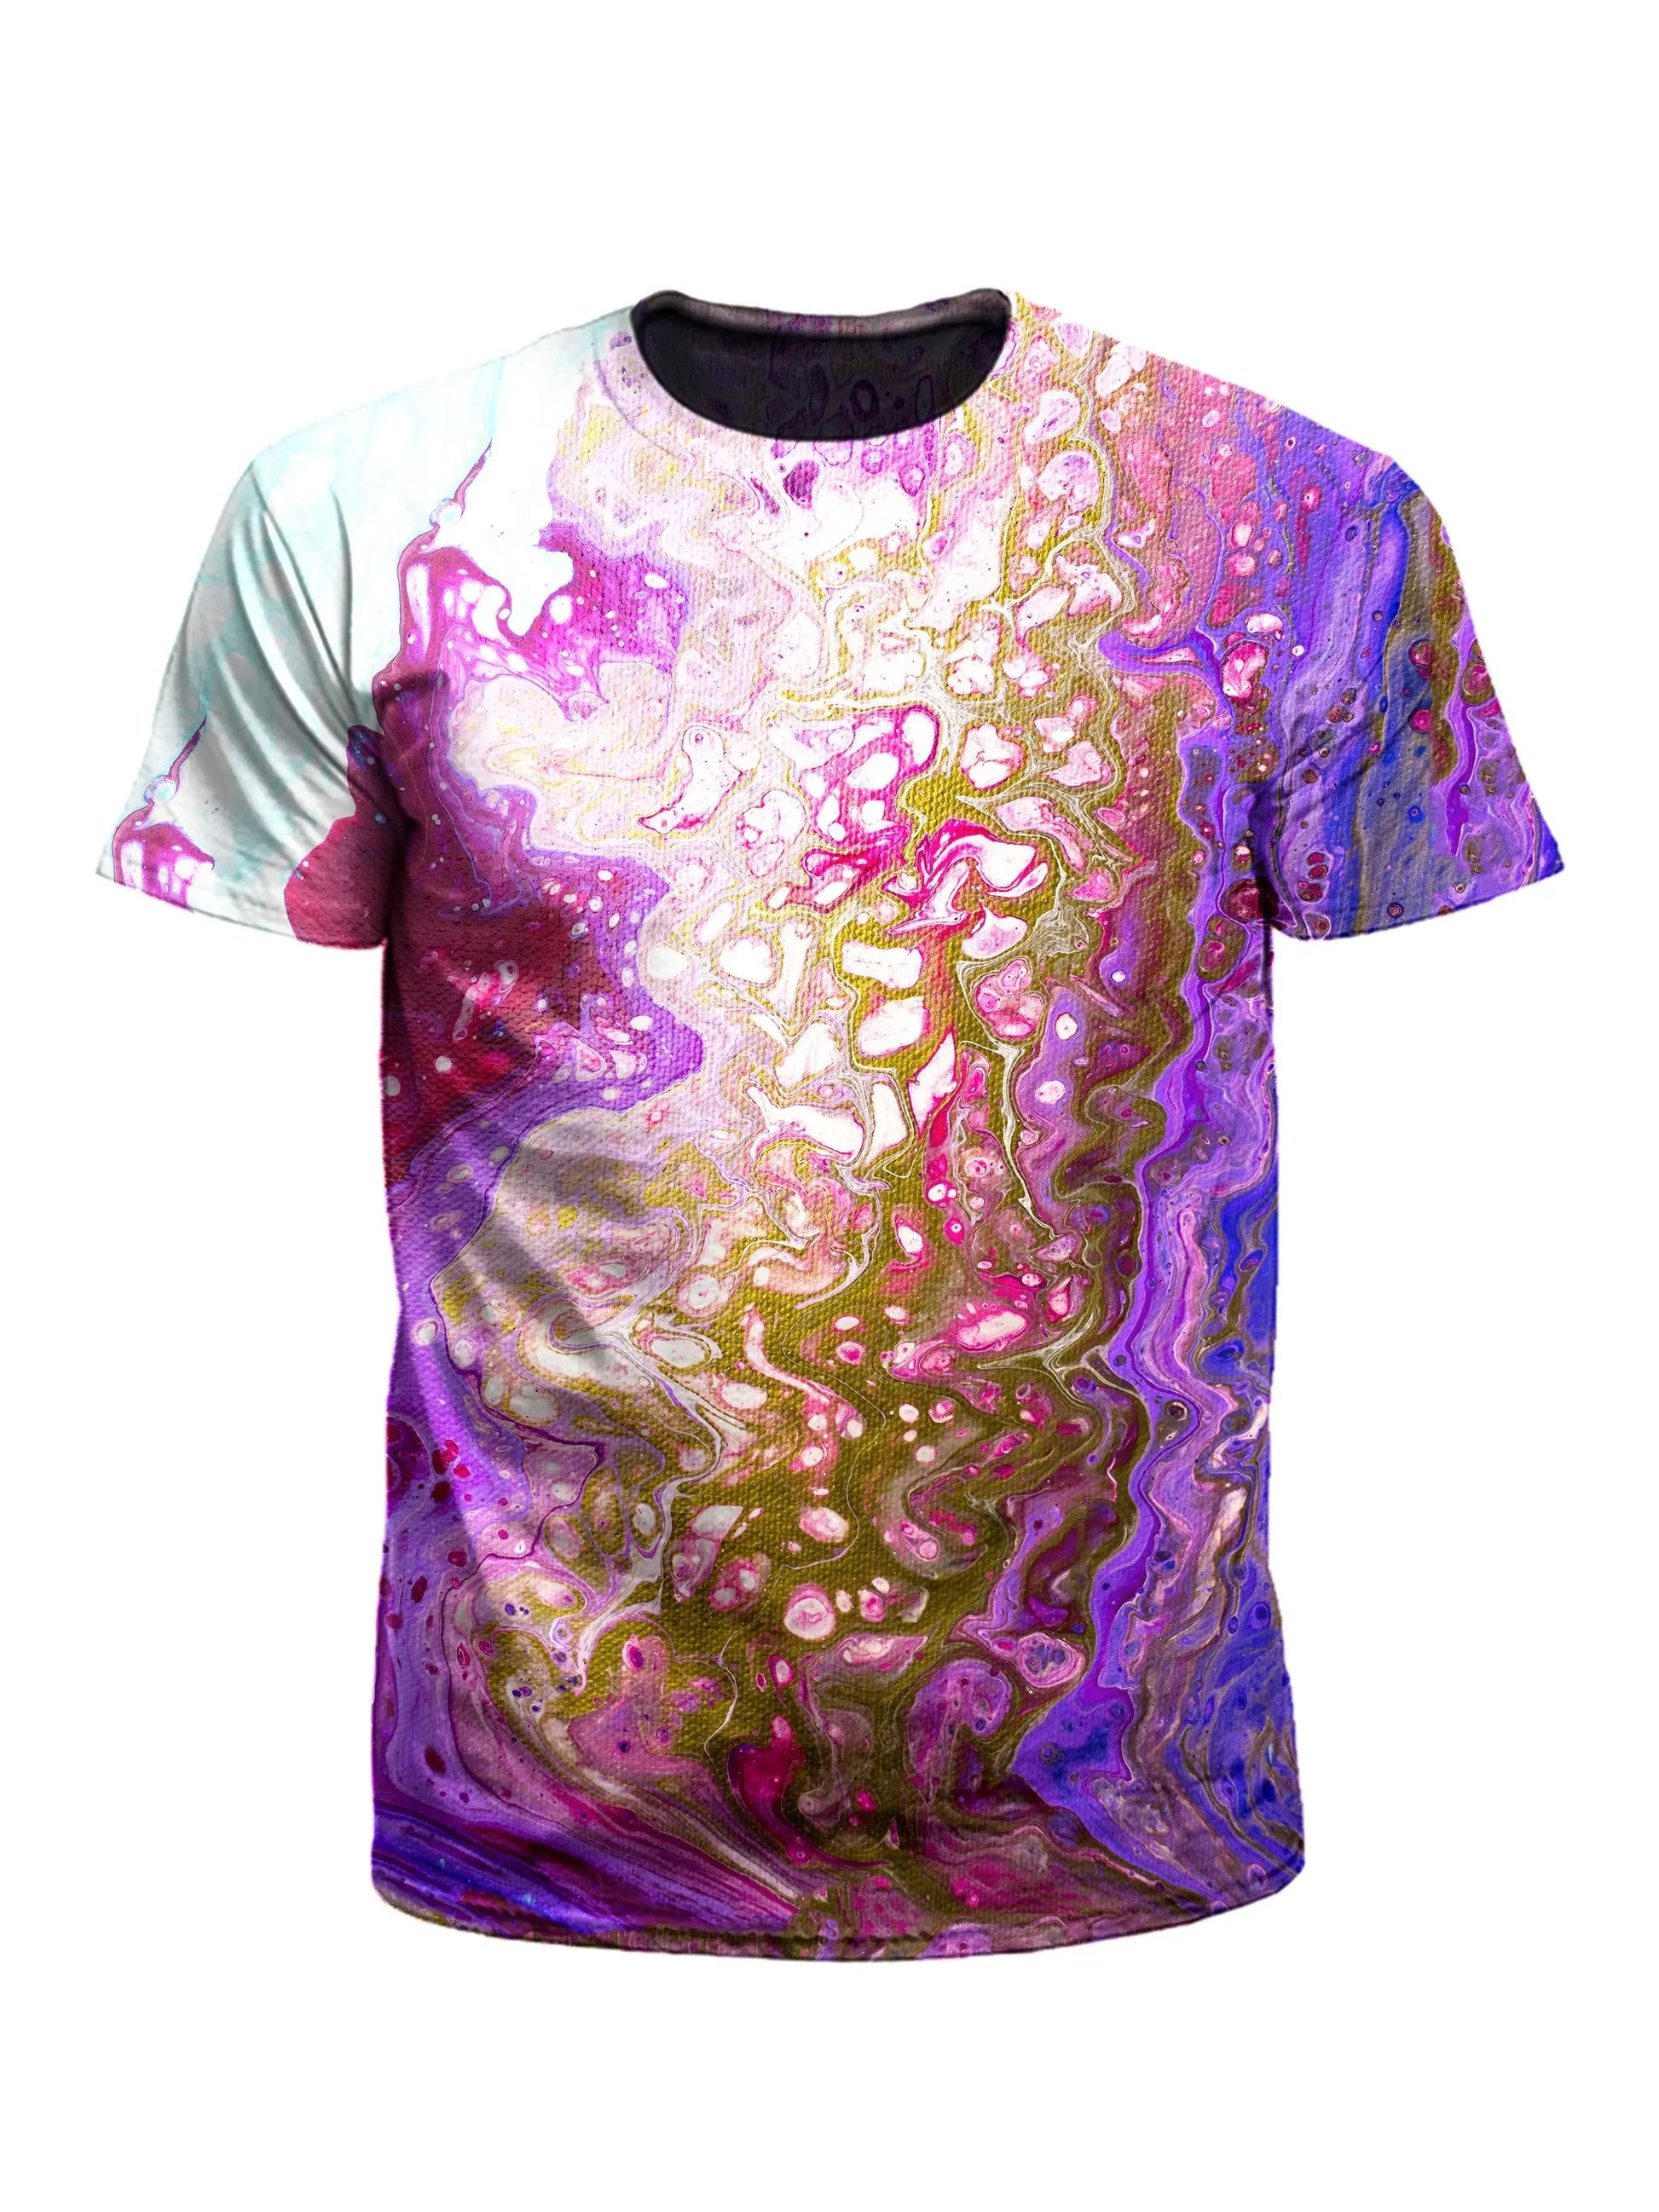 Men's pink, purple & gold marbling unisex t-shirt front view.